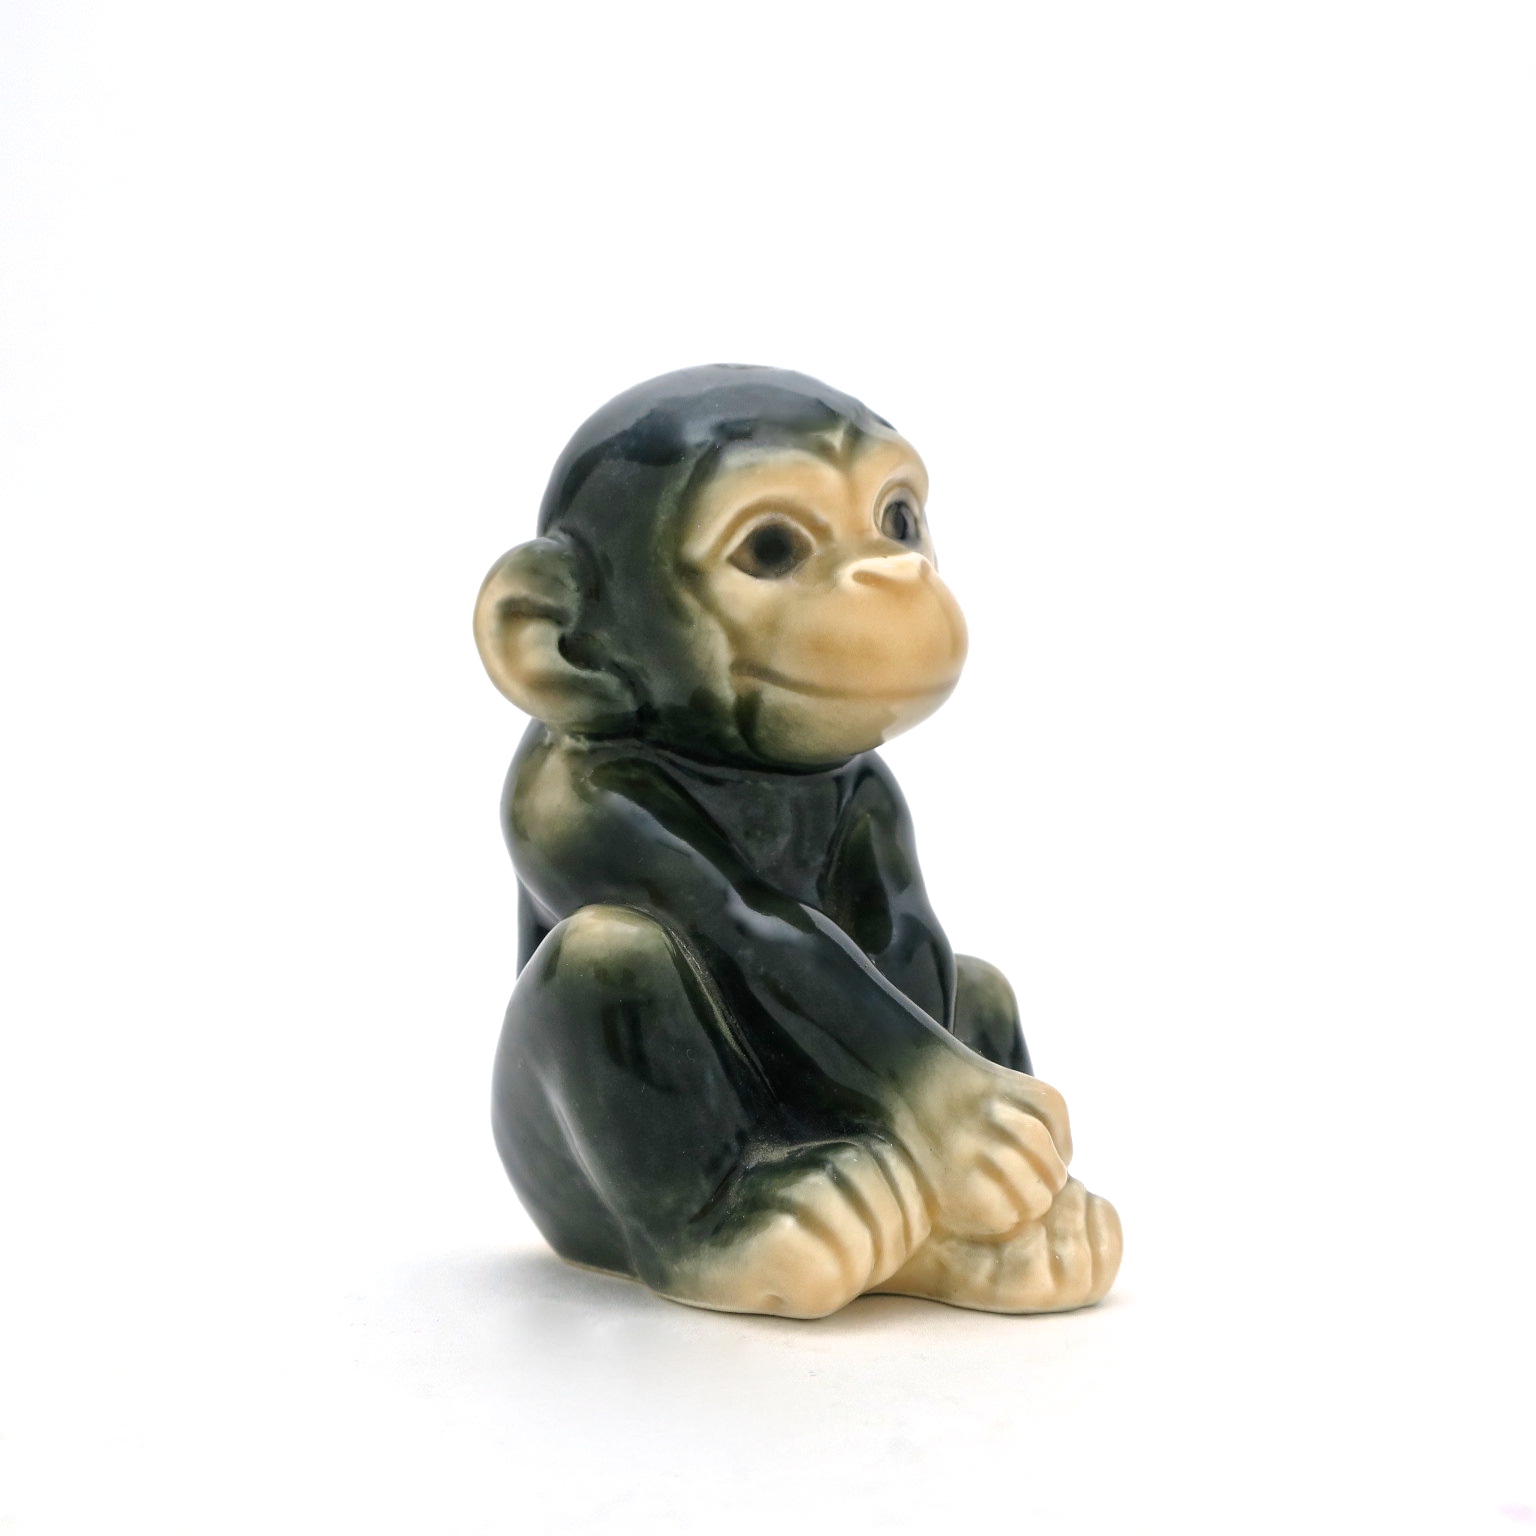 affe schimpanse chimpanzee goebel vintage keramik seele kaufmuseum ceramique vintage design interiordetail inneneinrichtung